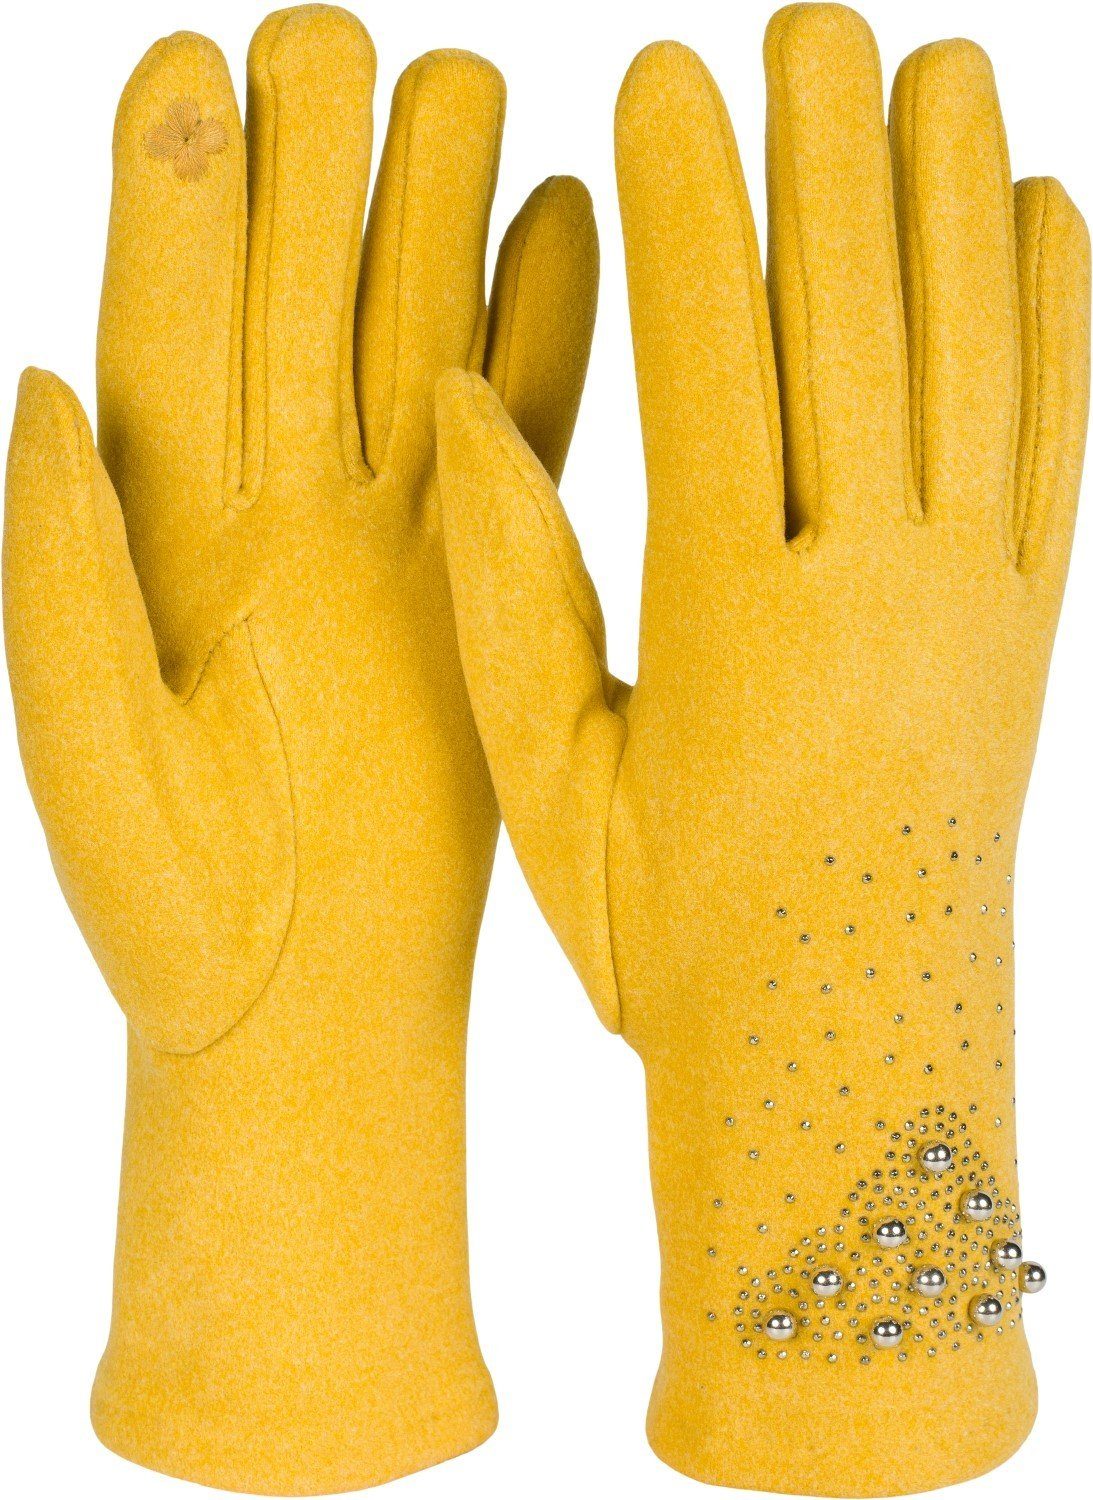 styleBREAKER Fleecehandschuhe Touchscreen Handschuhe mit Strass und Perlen Senf